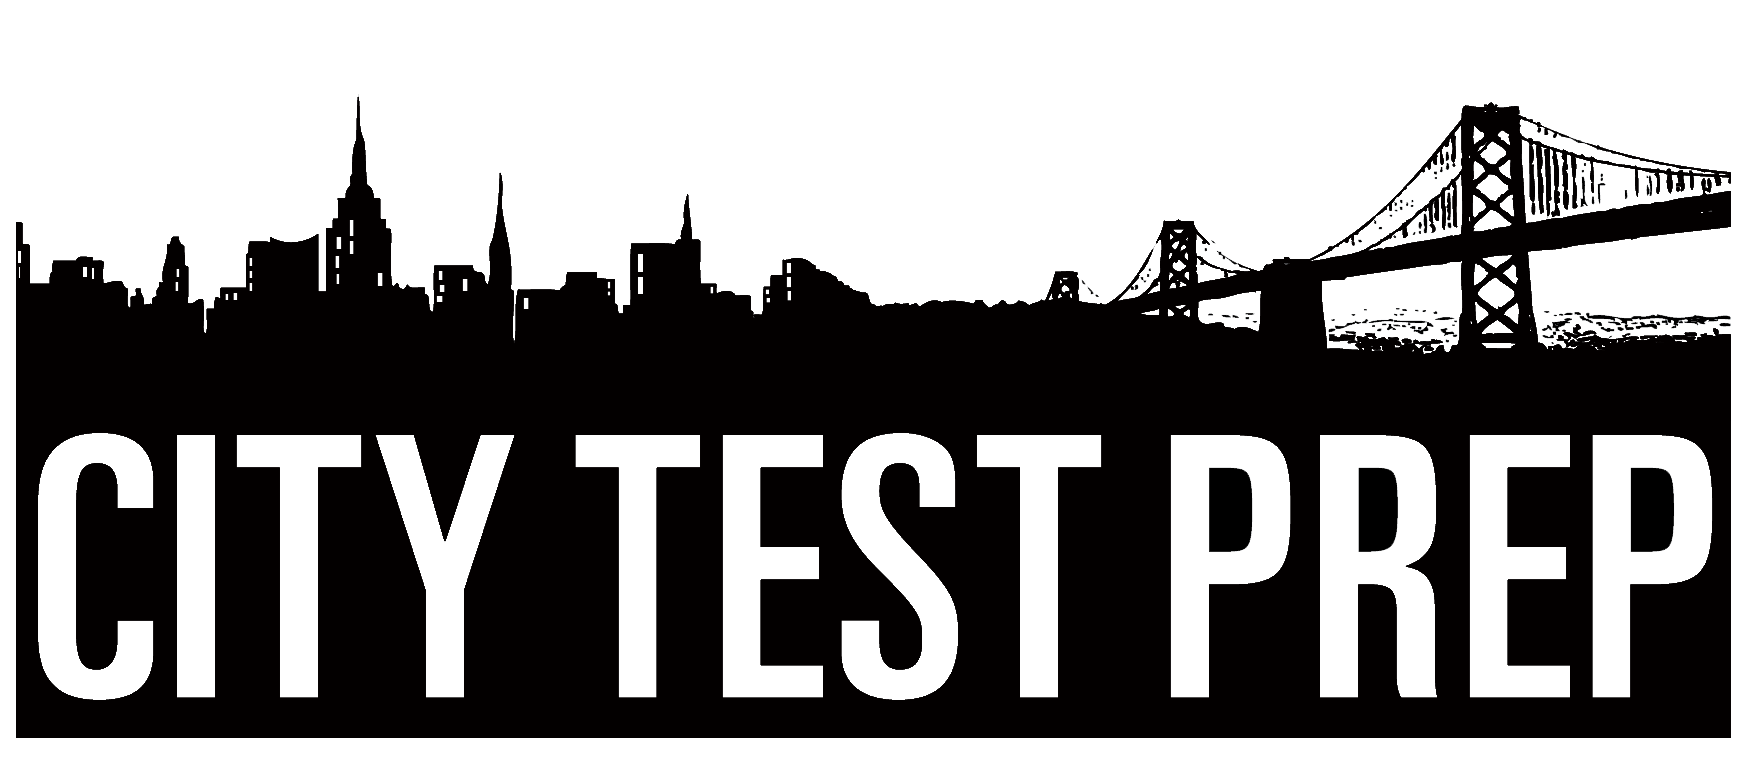 city test prep